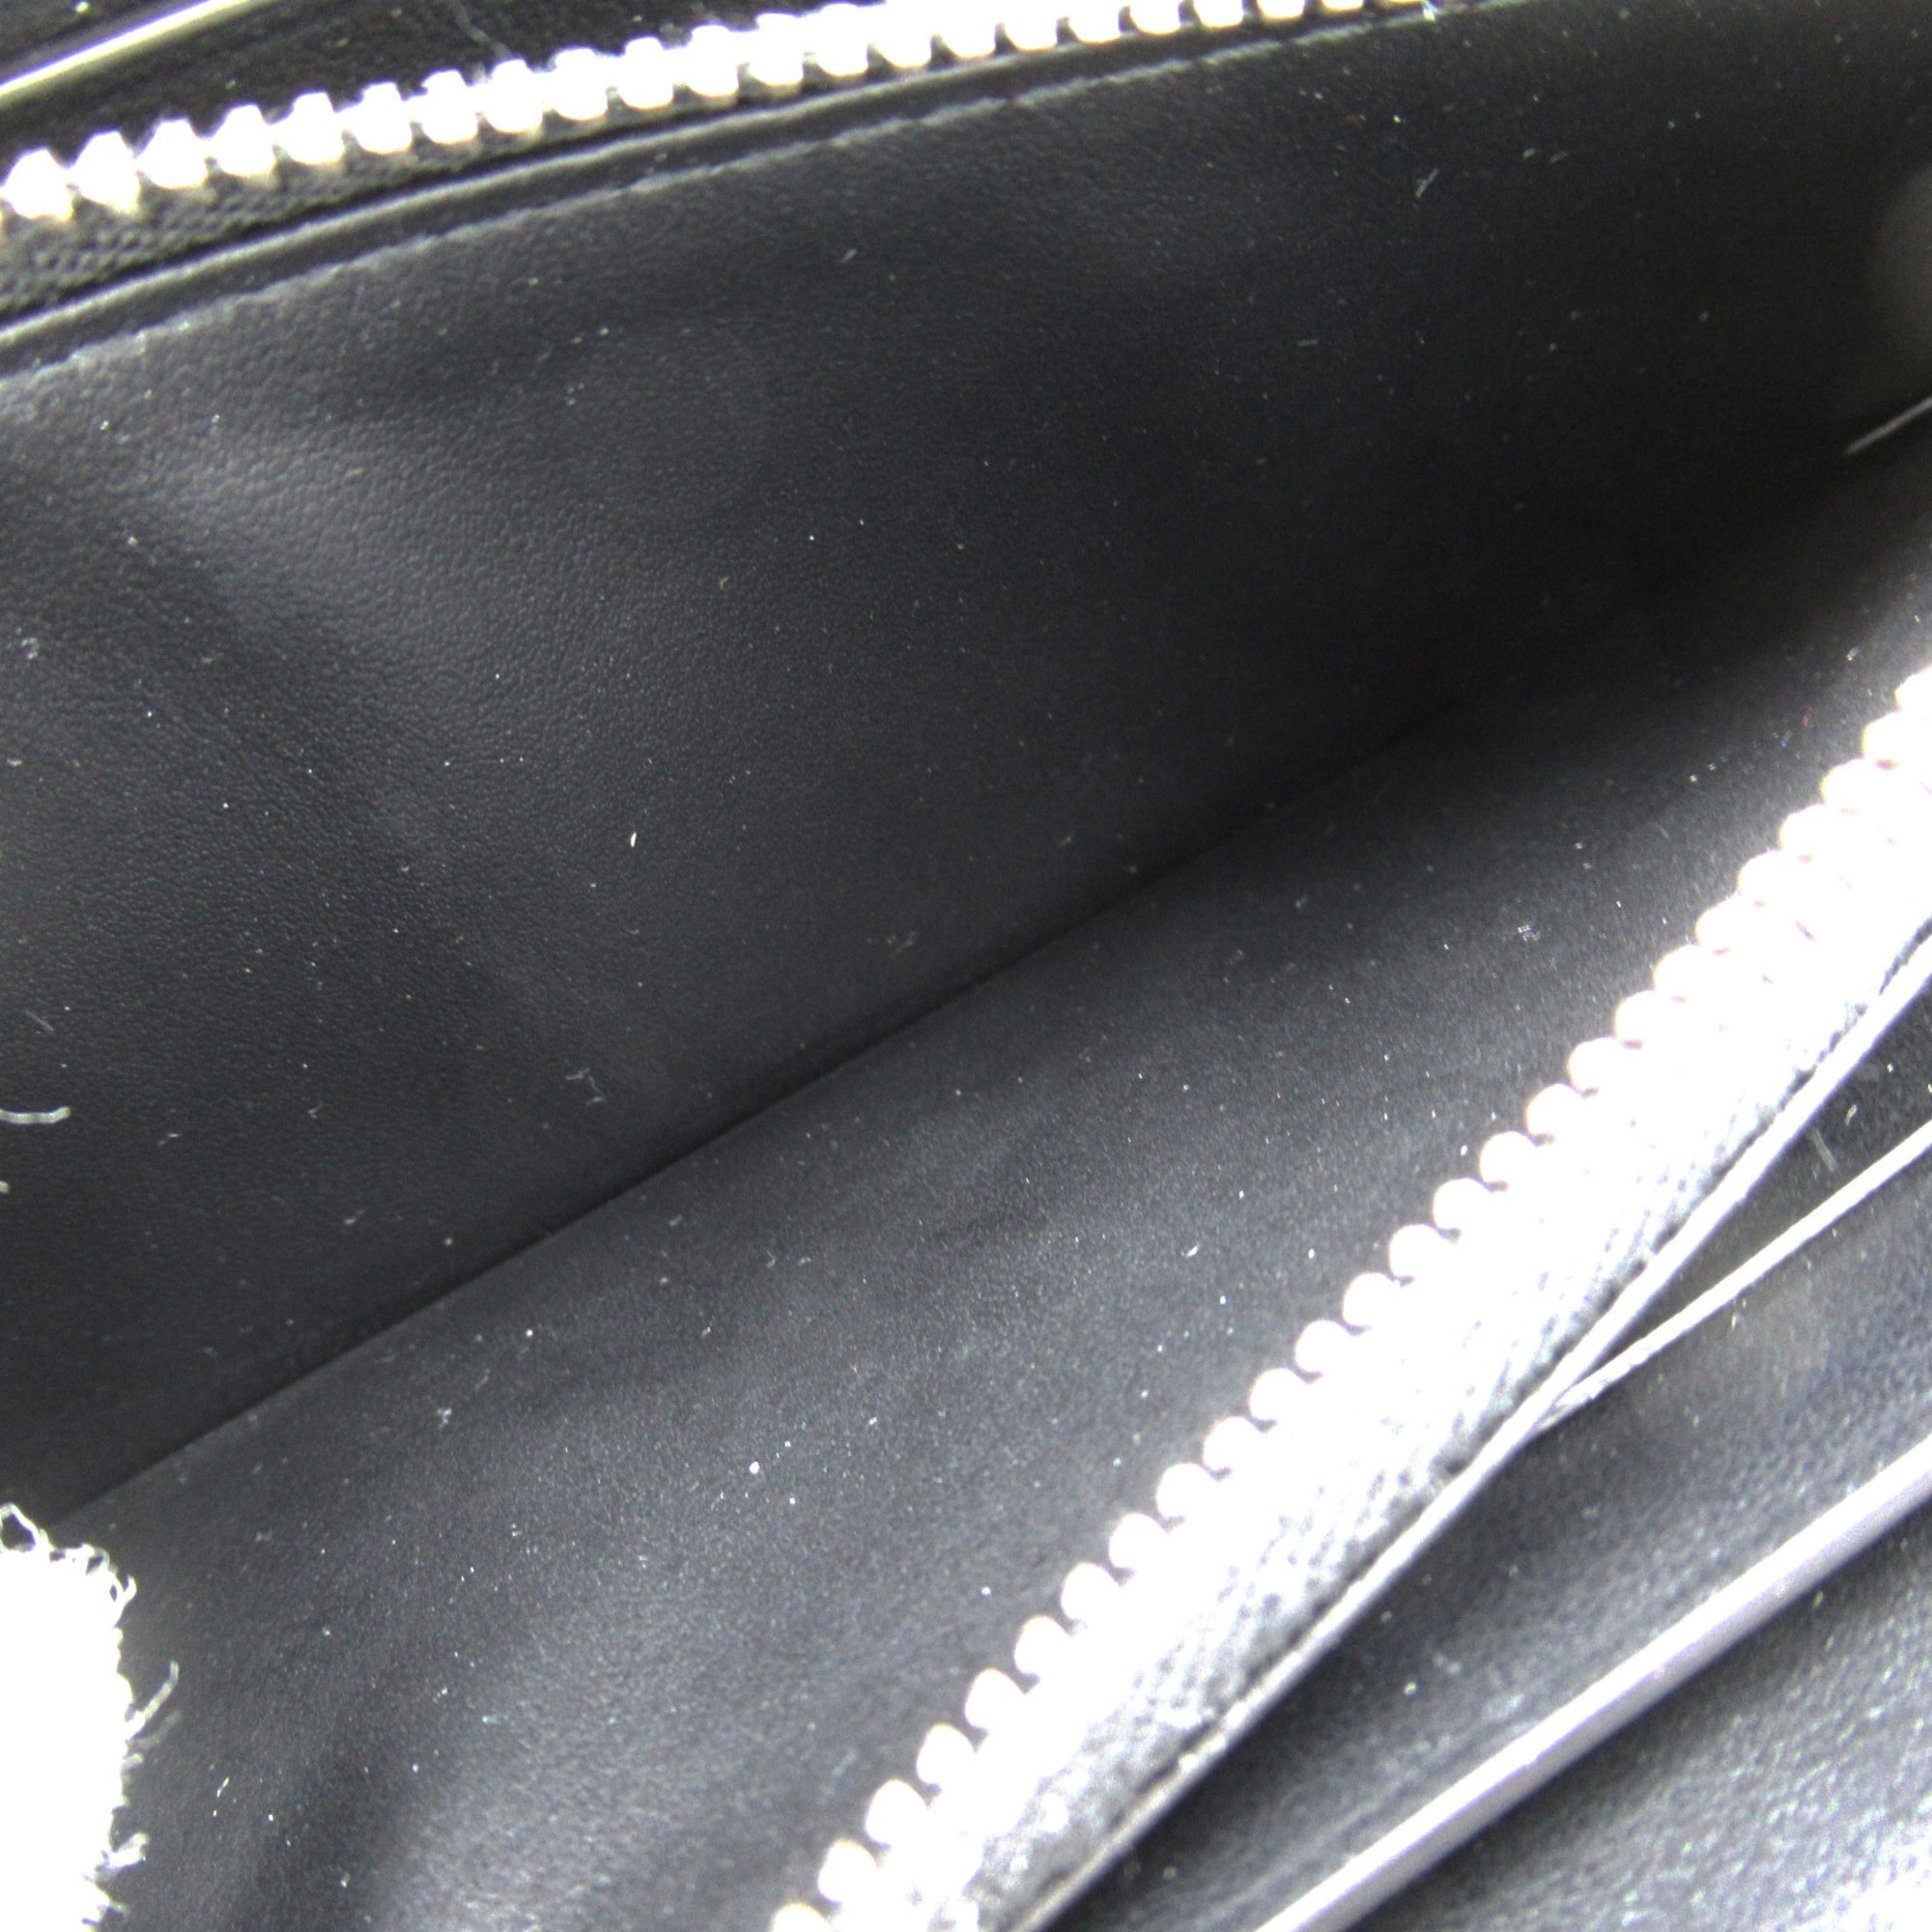 BOTTEGA VENETA Round long wallet Brown Black leather 639856-VCPQ7/2138